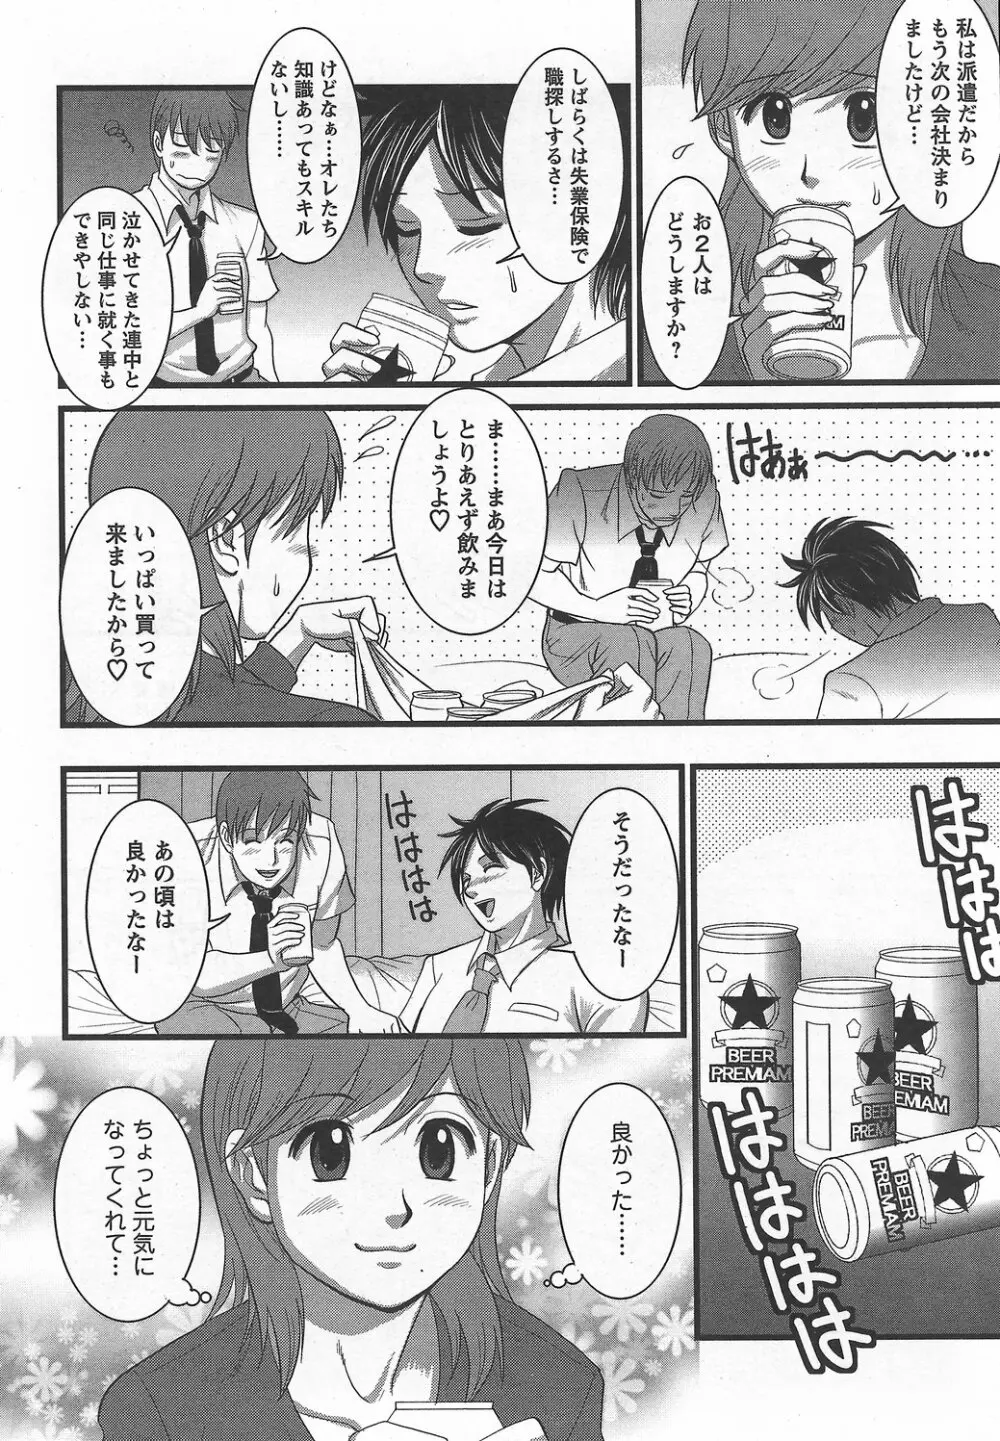 Haken no Muuko-san 6 11ページ